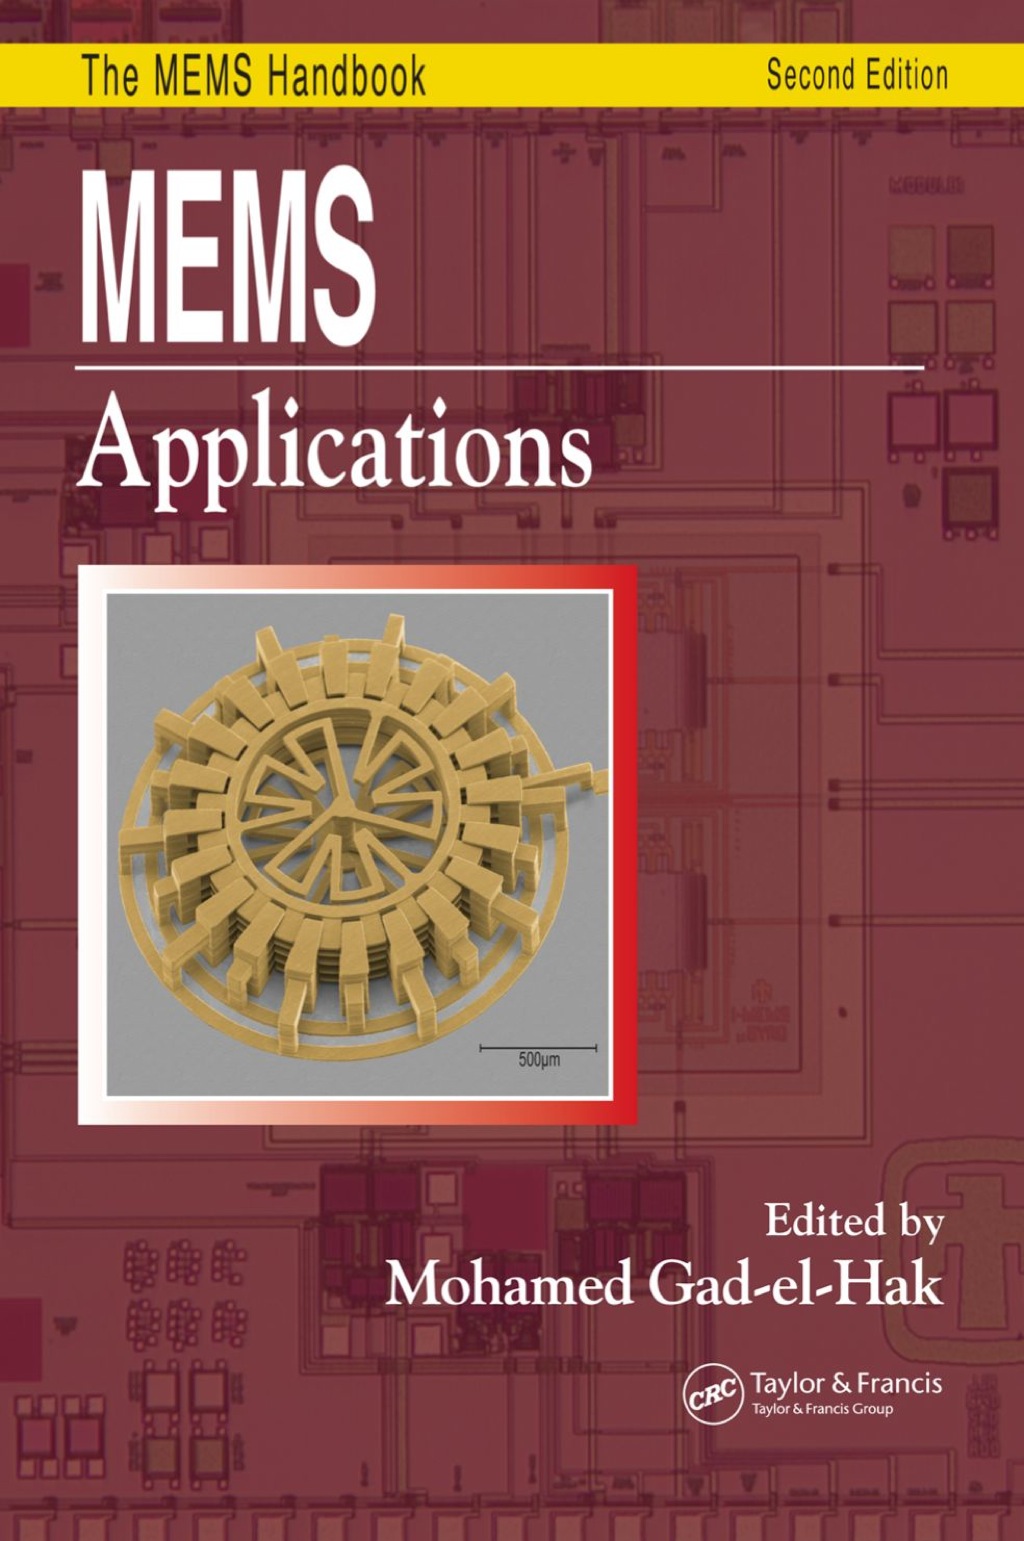 MEMS (eBook) - Mohamed Gad-el-Hak